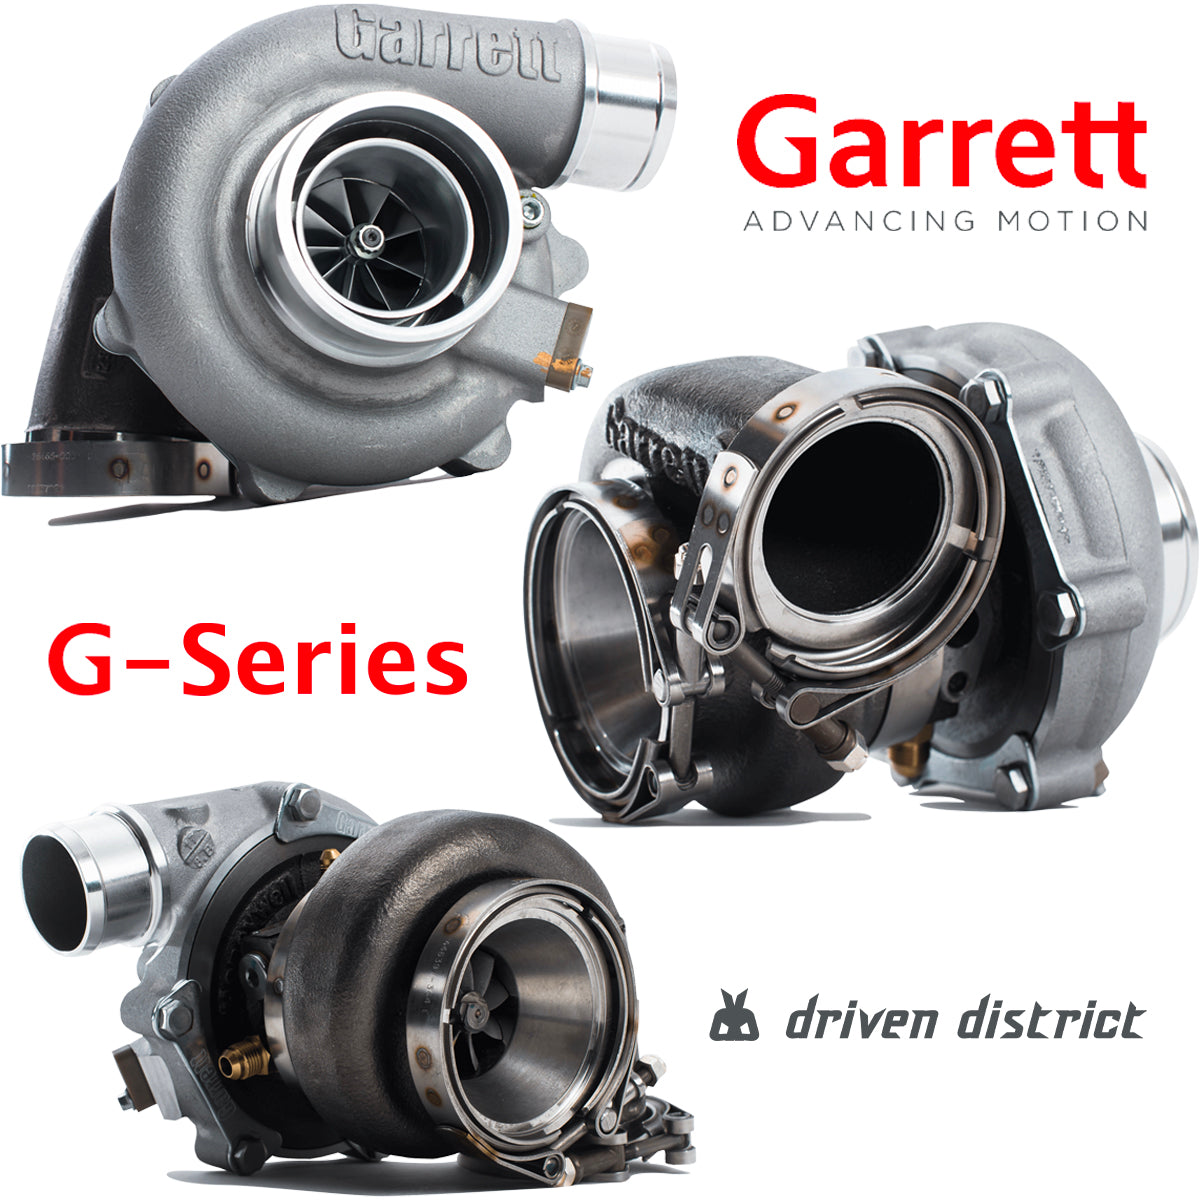 garrett-g-series